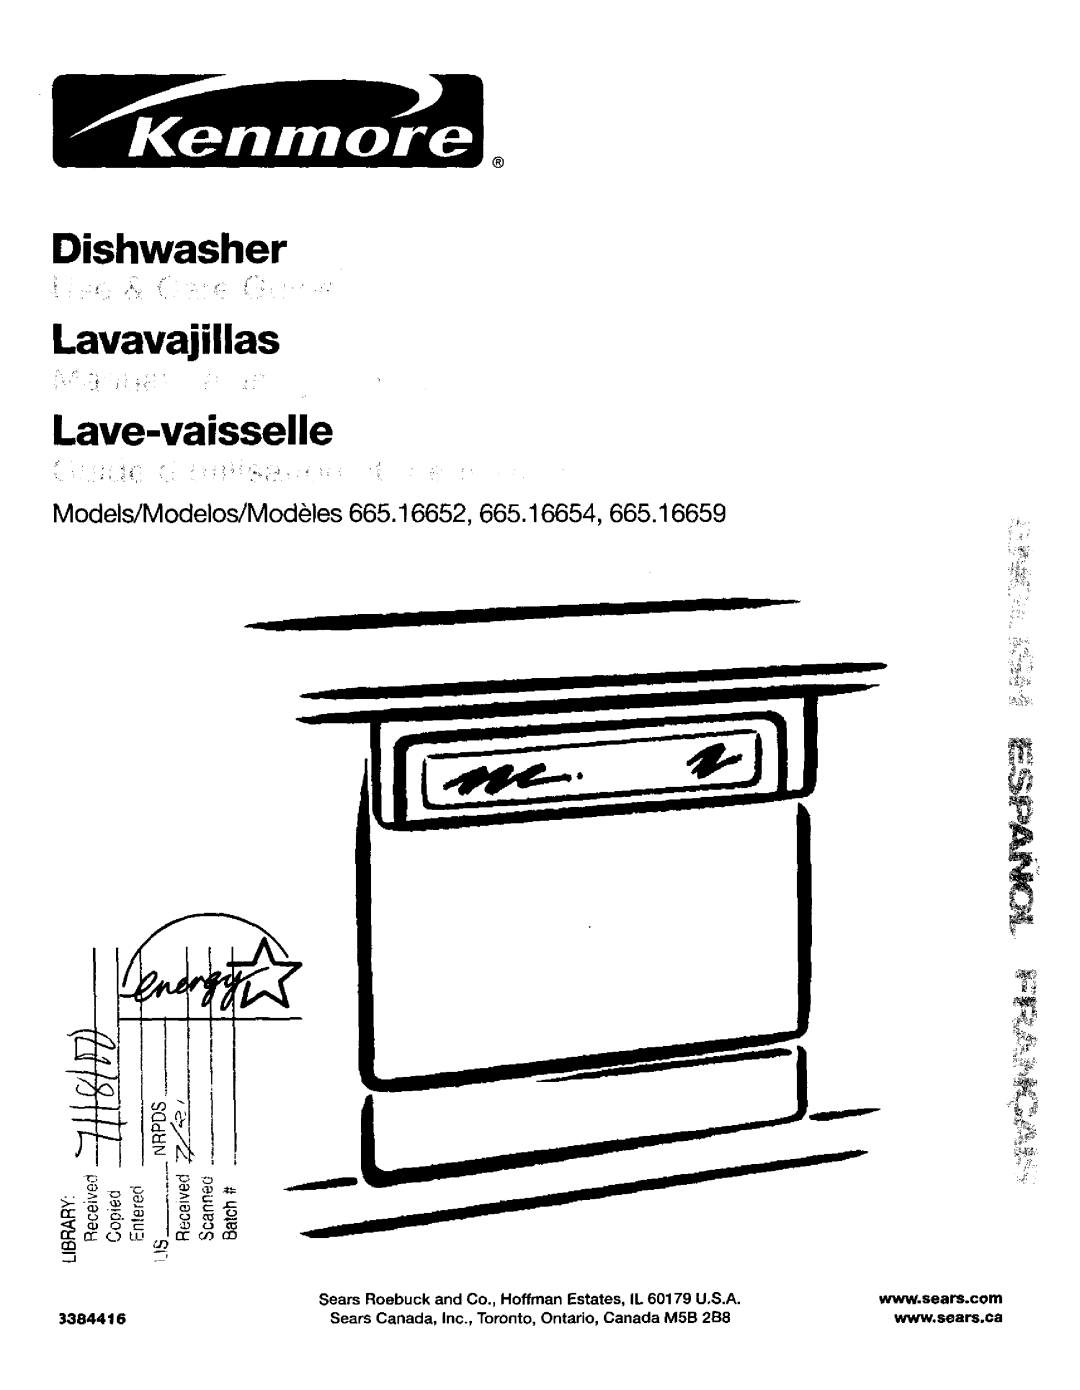 Kenmore 665.16659 manual Dishwasher Lavavajillas Lave-vaisselle, Models/Modelos/Mod_les 665.16652, 665.16654 